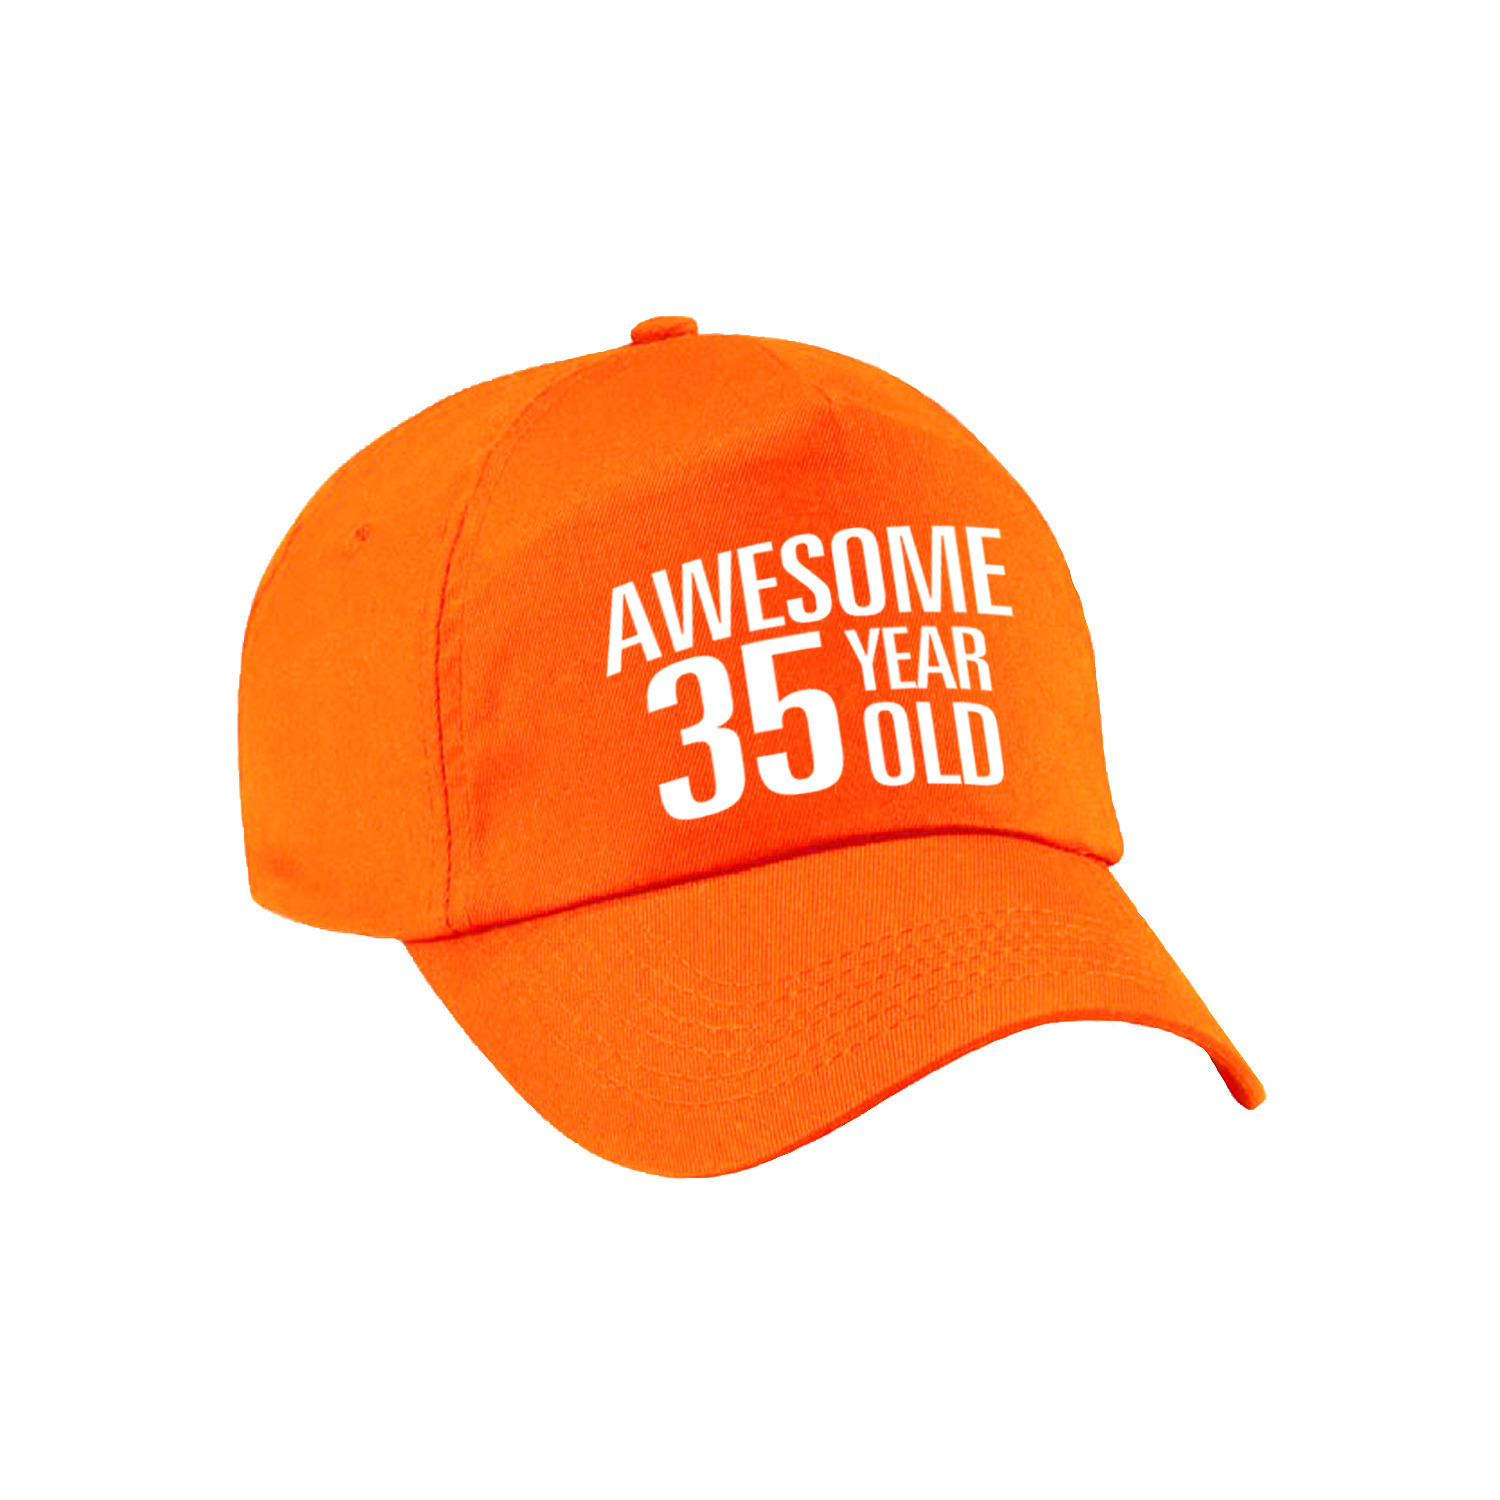 Awesome 35 year old verjaardag pet - cap oranje voor dames en heren